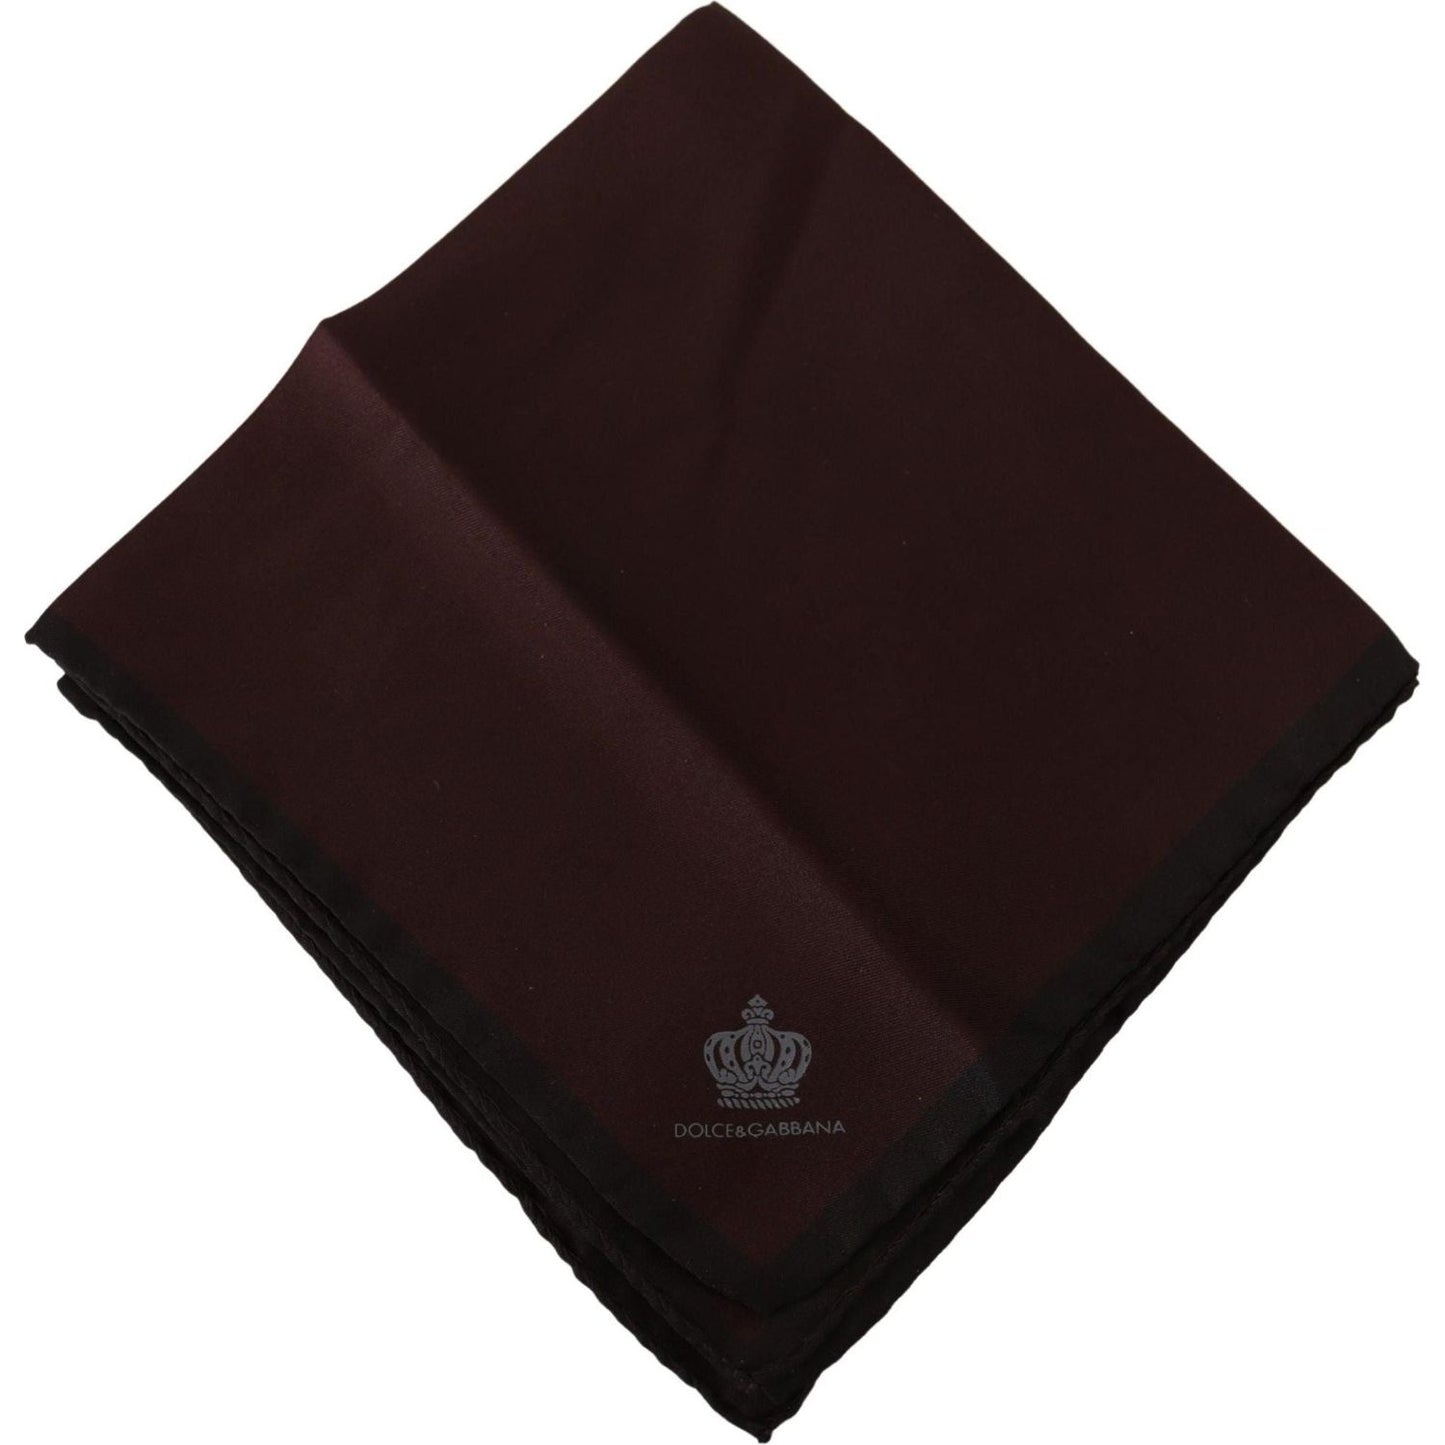 Dolce & Gabbana Maroon Square Handkerchief 100% Silk Scarf maroon-square-handkerchief-100-silk-scarf IMG_8315-2c6a73fa-120.jpg